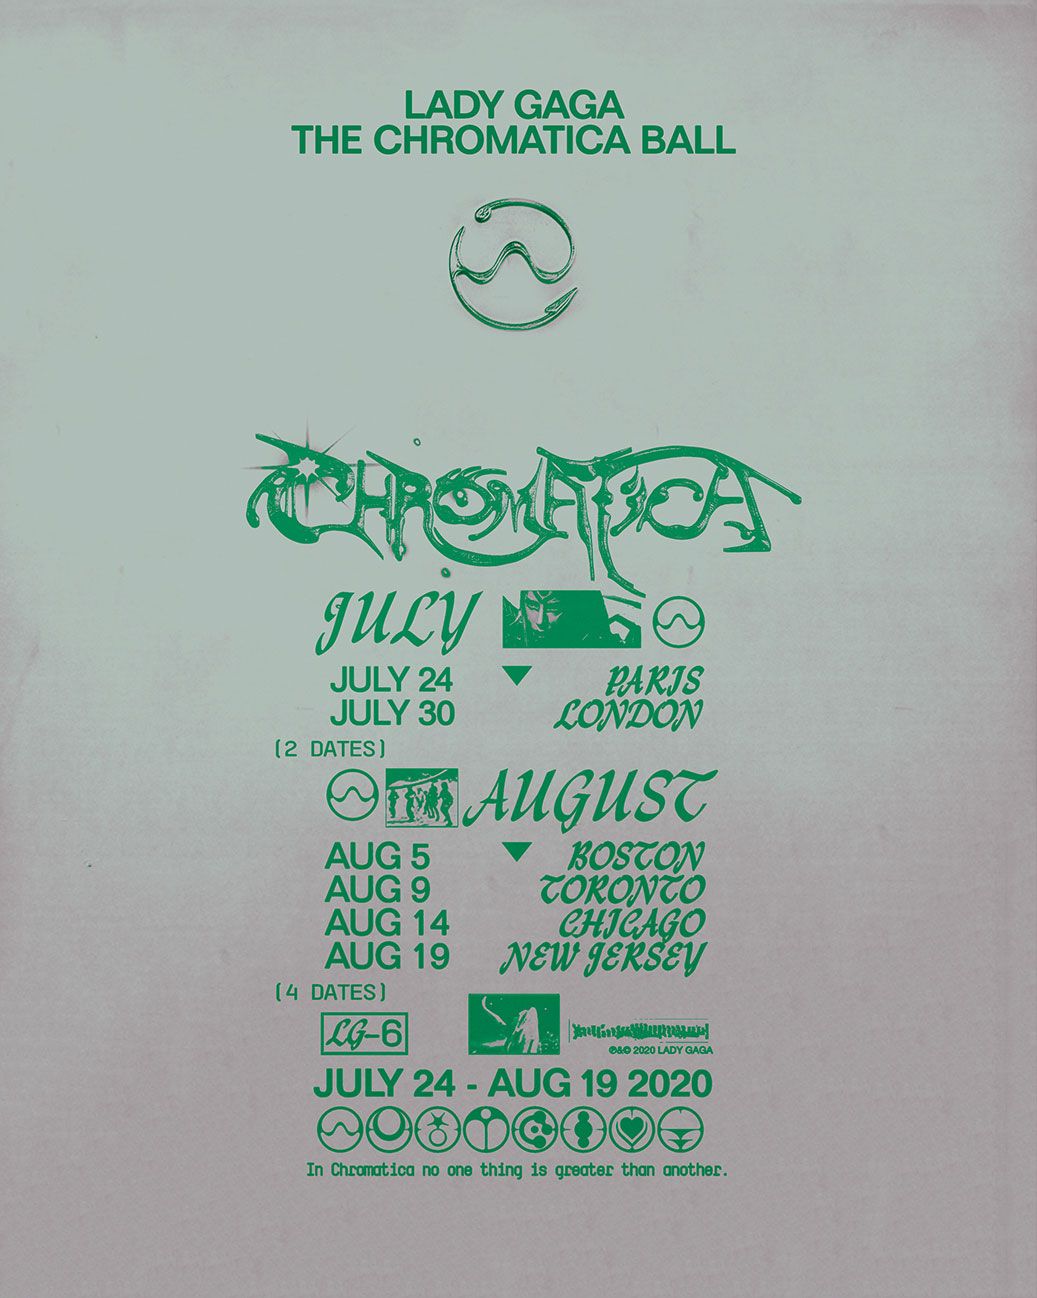 LADY GAGA. THE CHROMATICA BALL